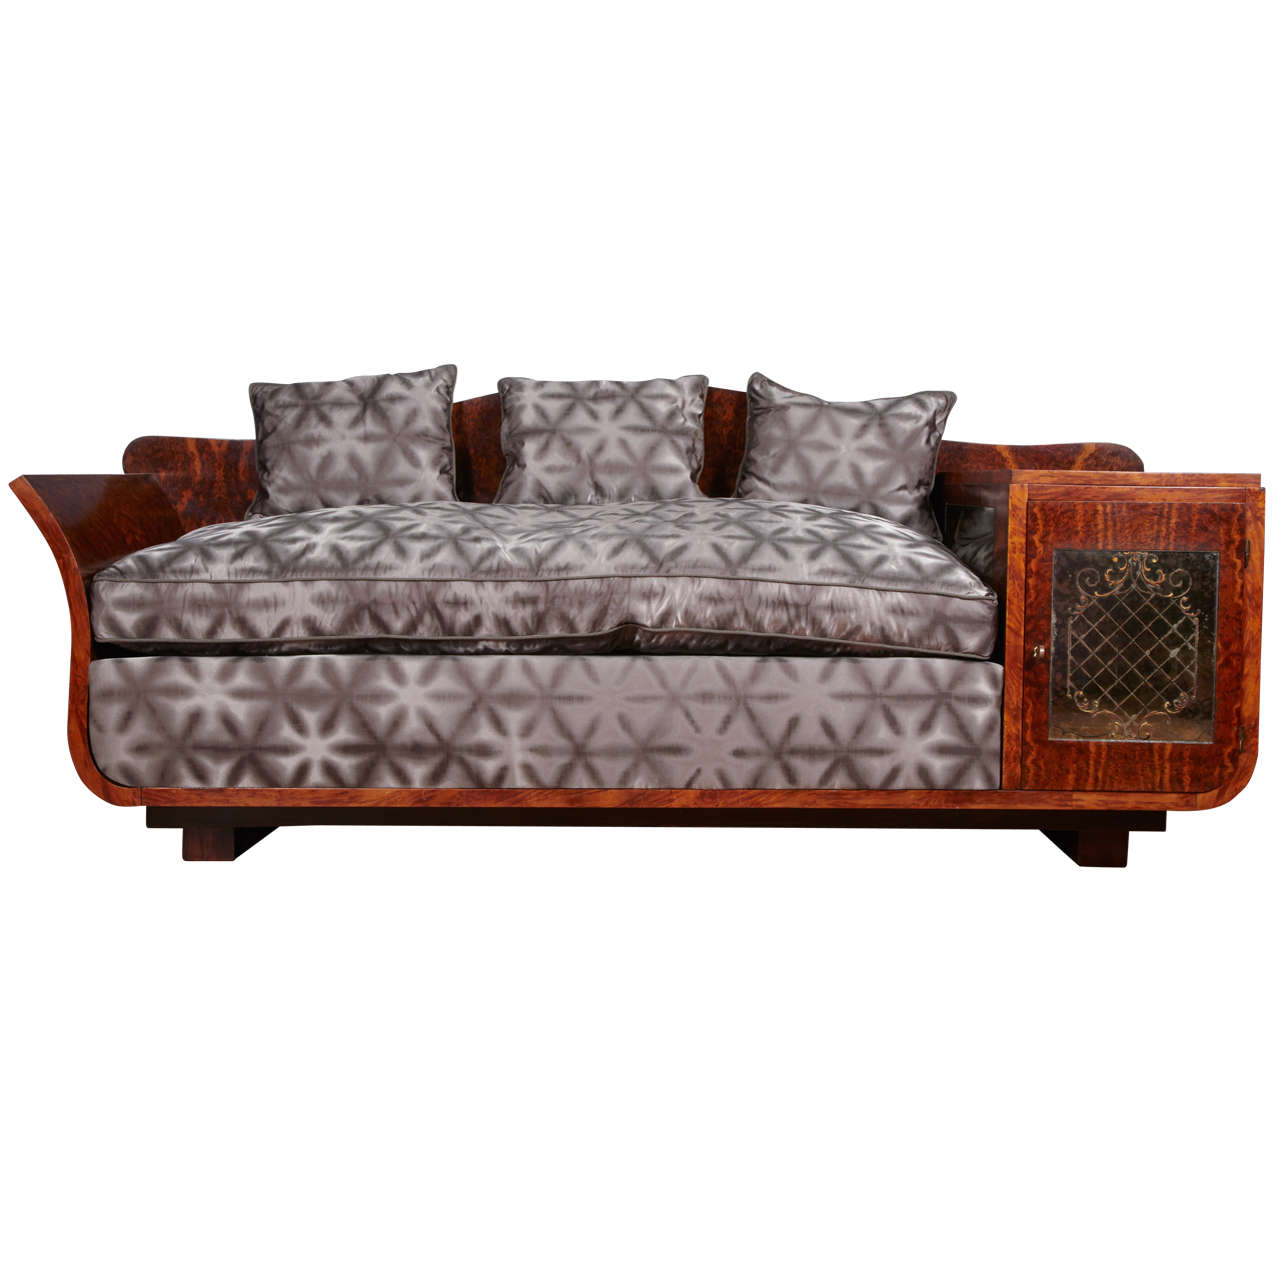 Extraordinary Art Deco sofa